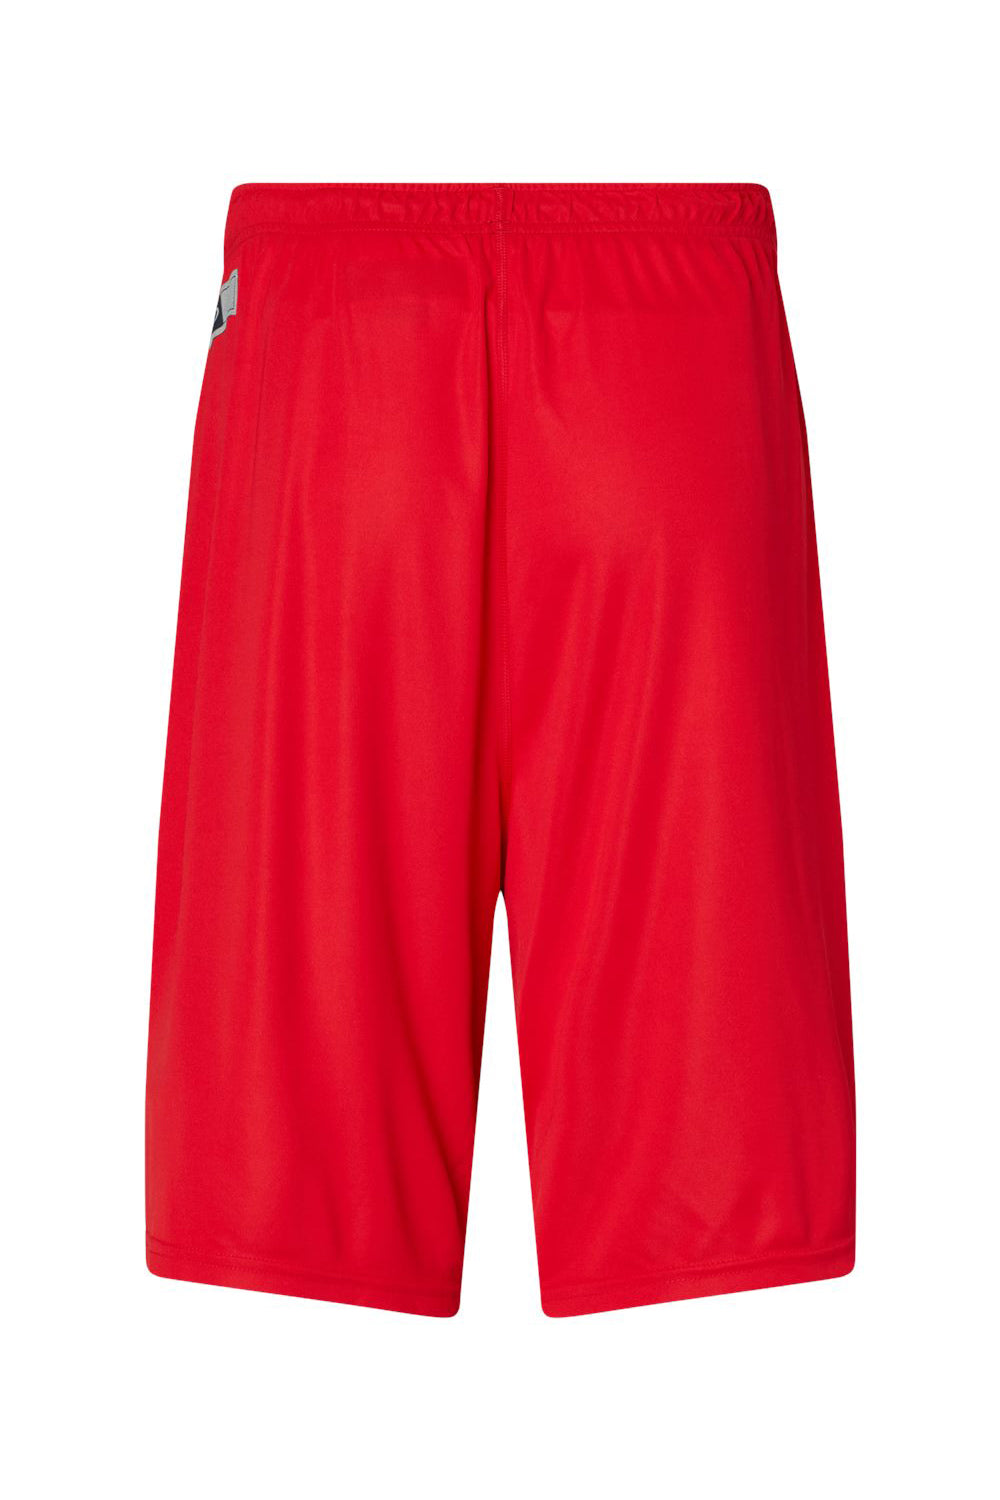 Oakley FOA402995 Mens Team Issue Hydrolix Shorts w/ Pockets Team Red Flat Back